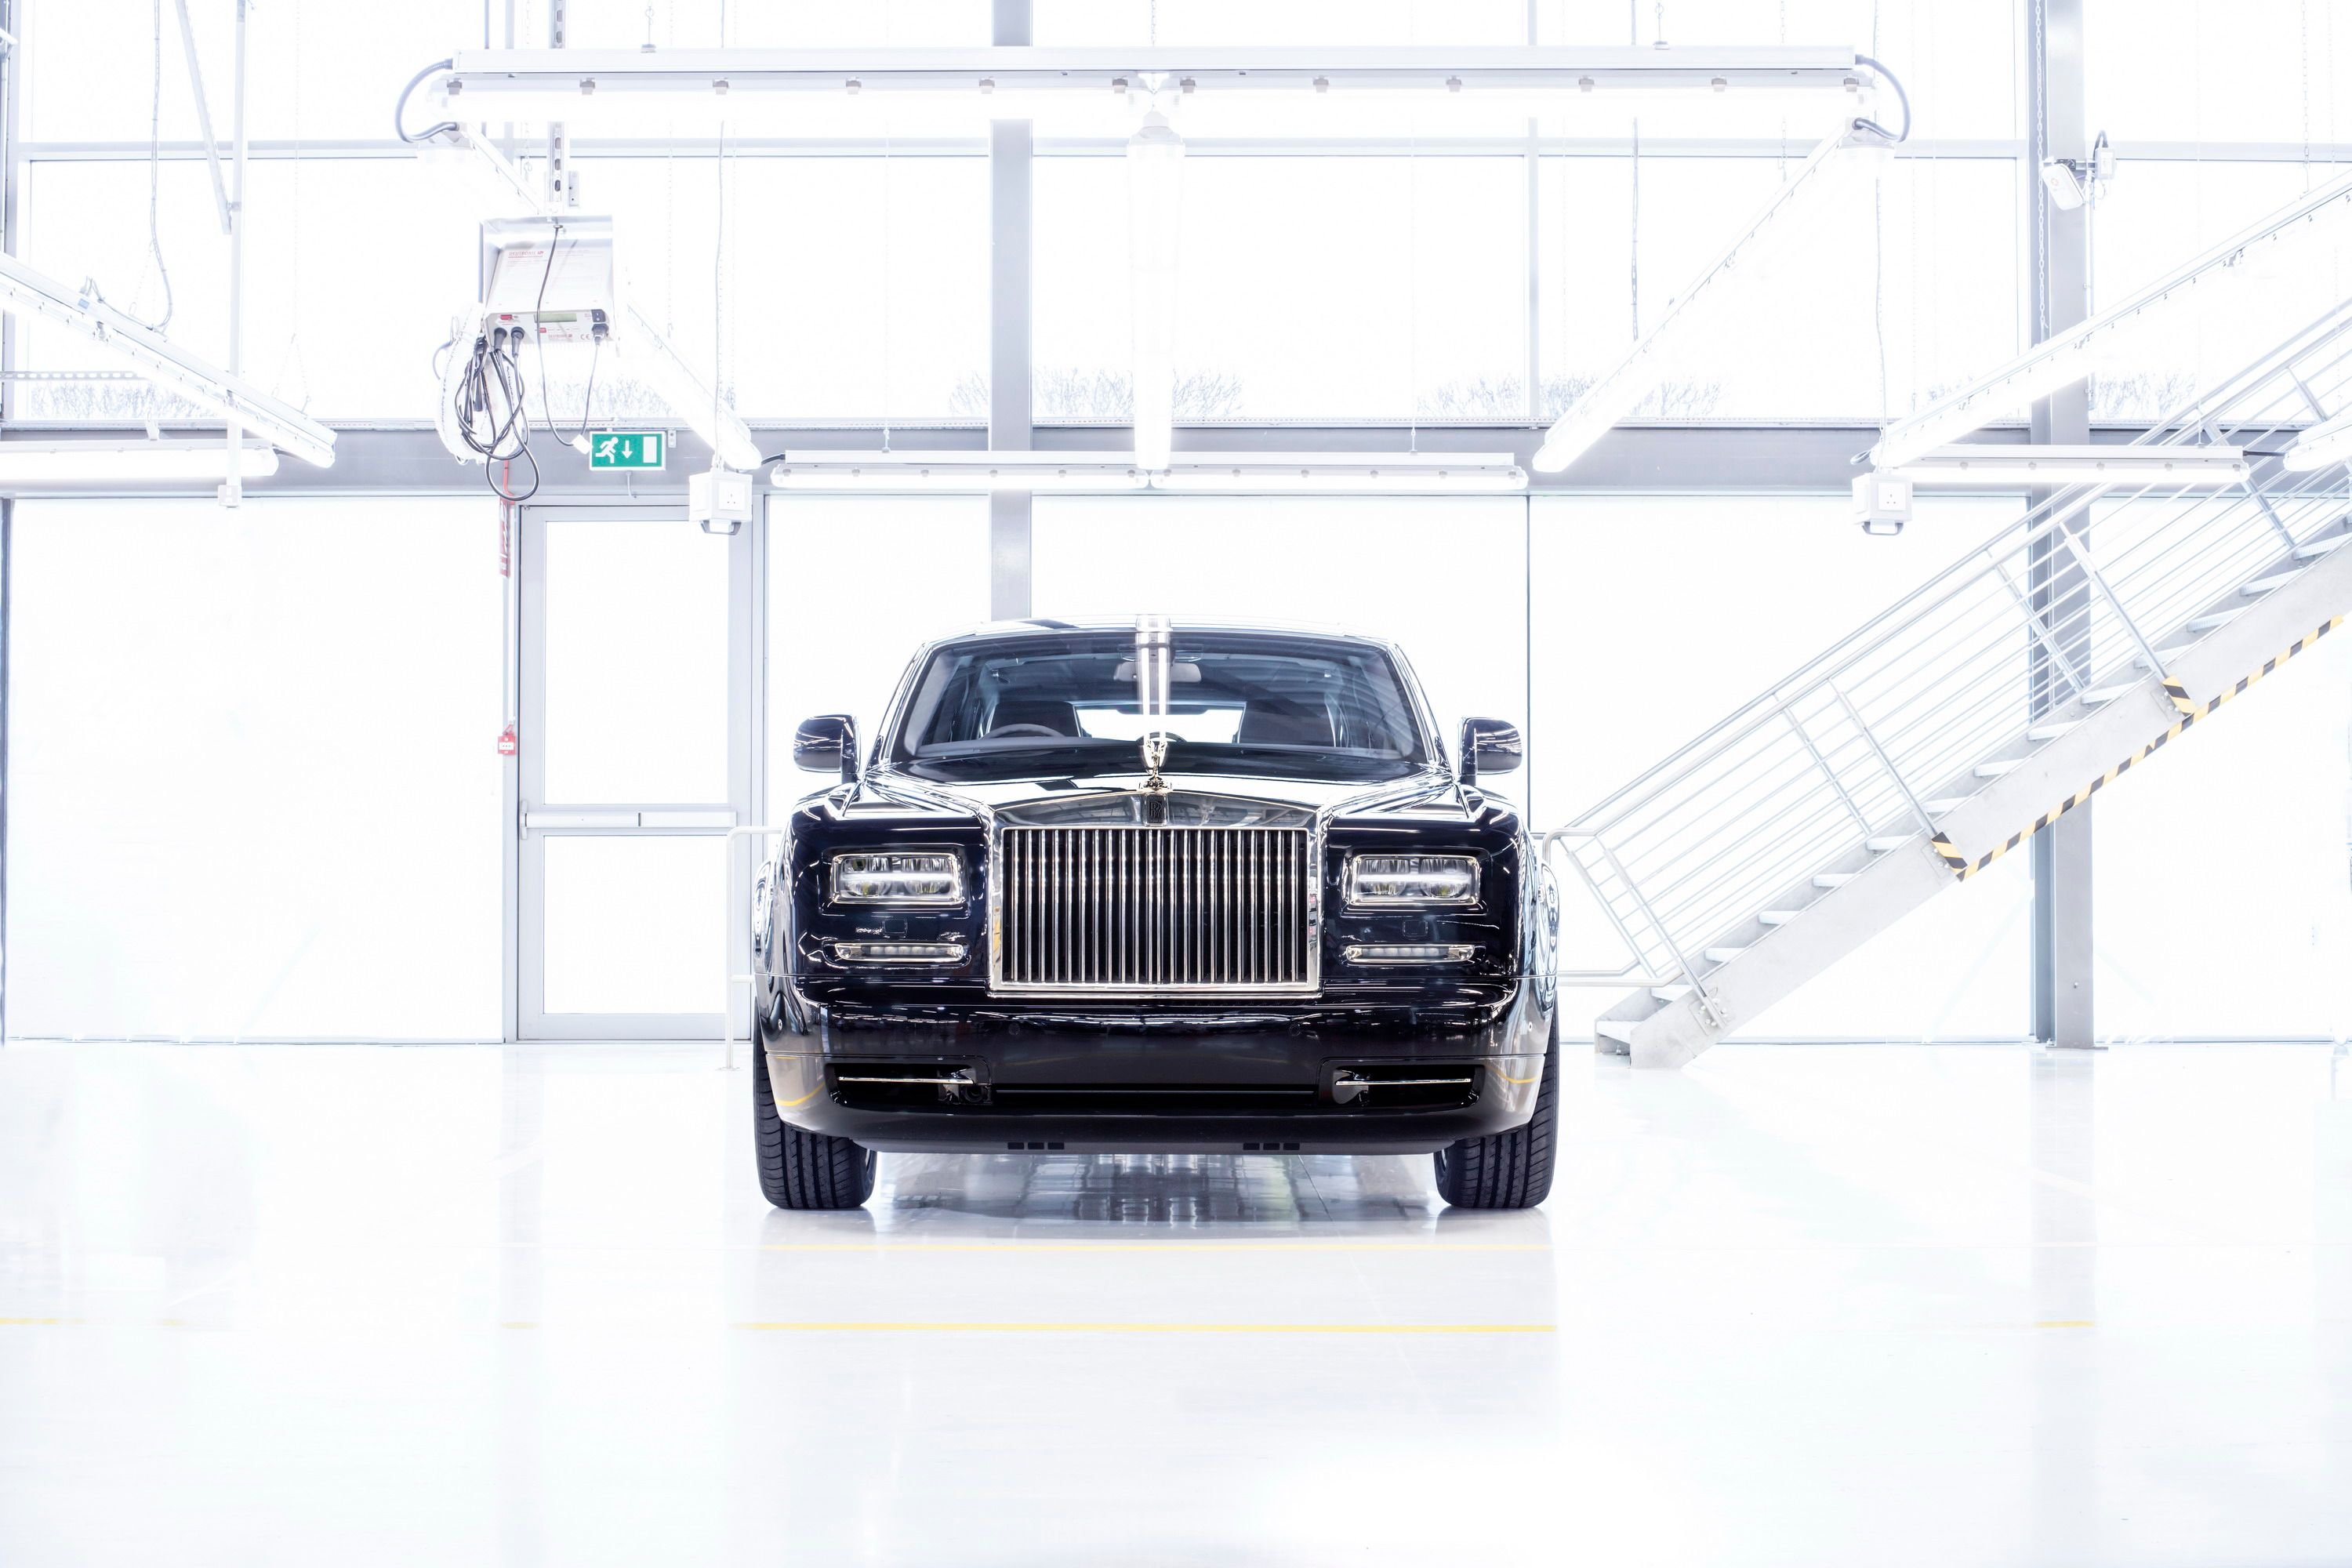 2017 Rolls-Royce Phantom VII Final Edition